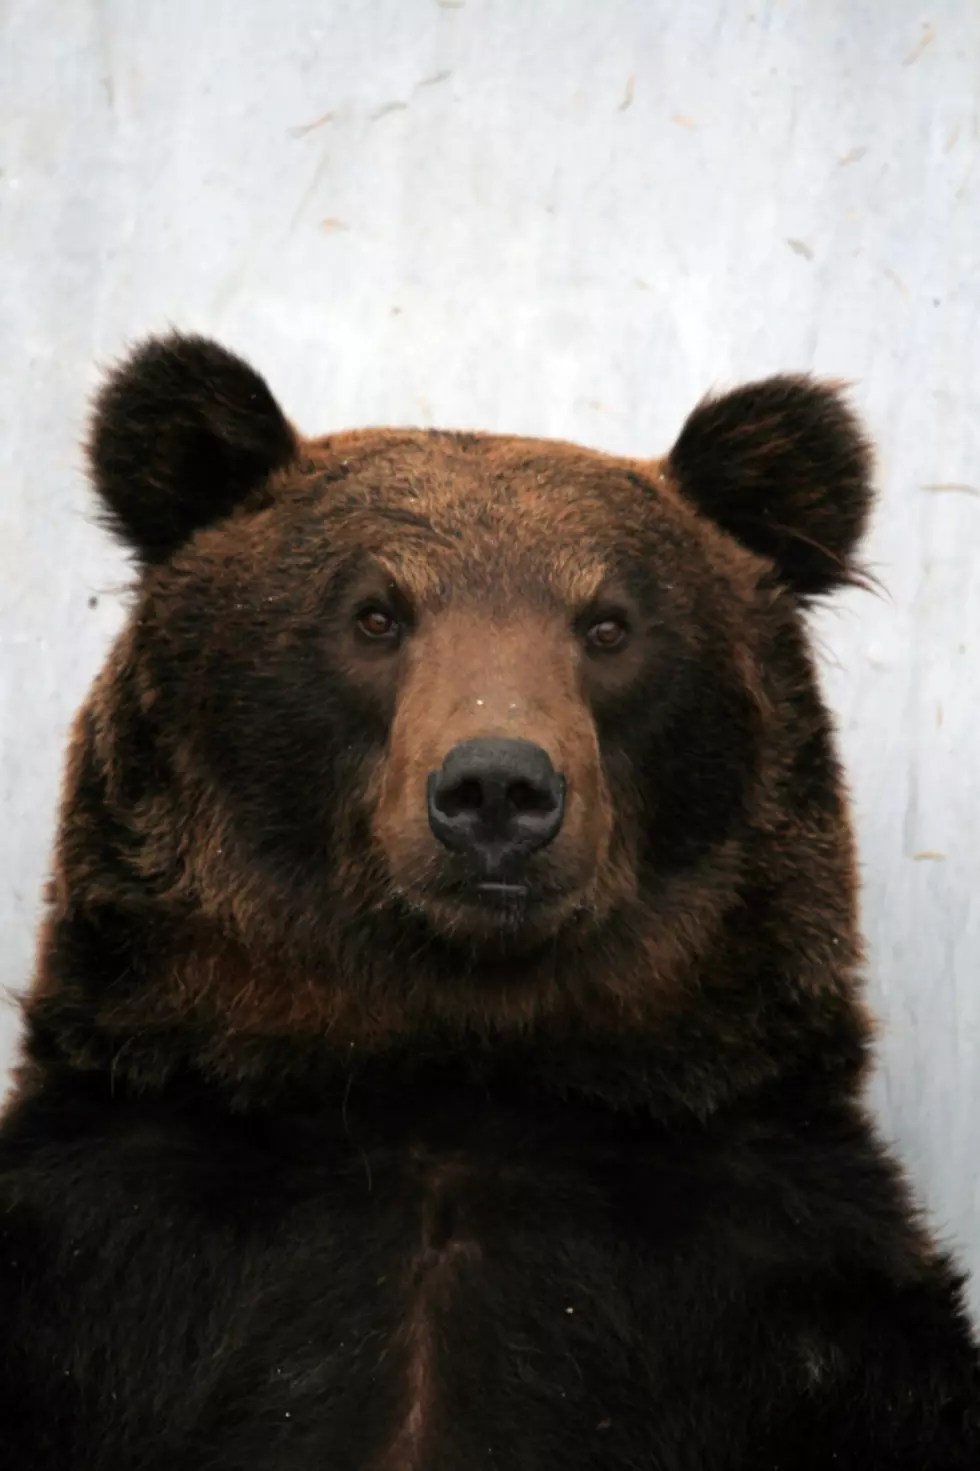 Is the Jersey black bear hunt really necessary?